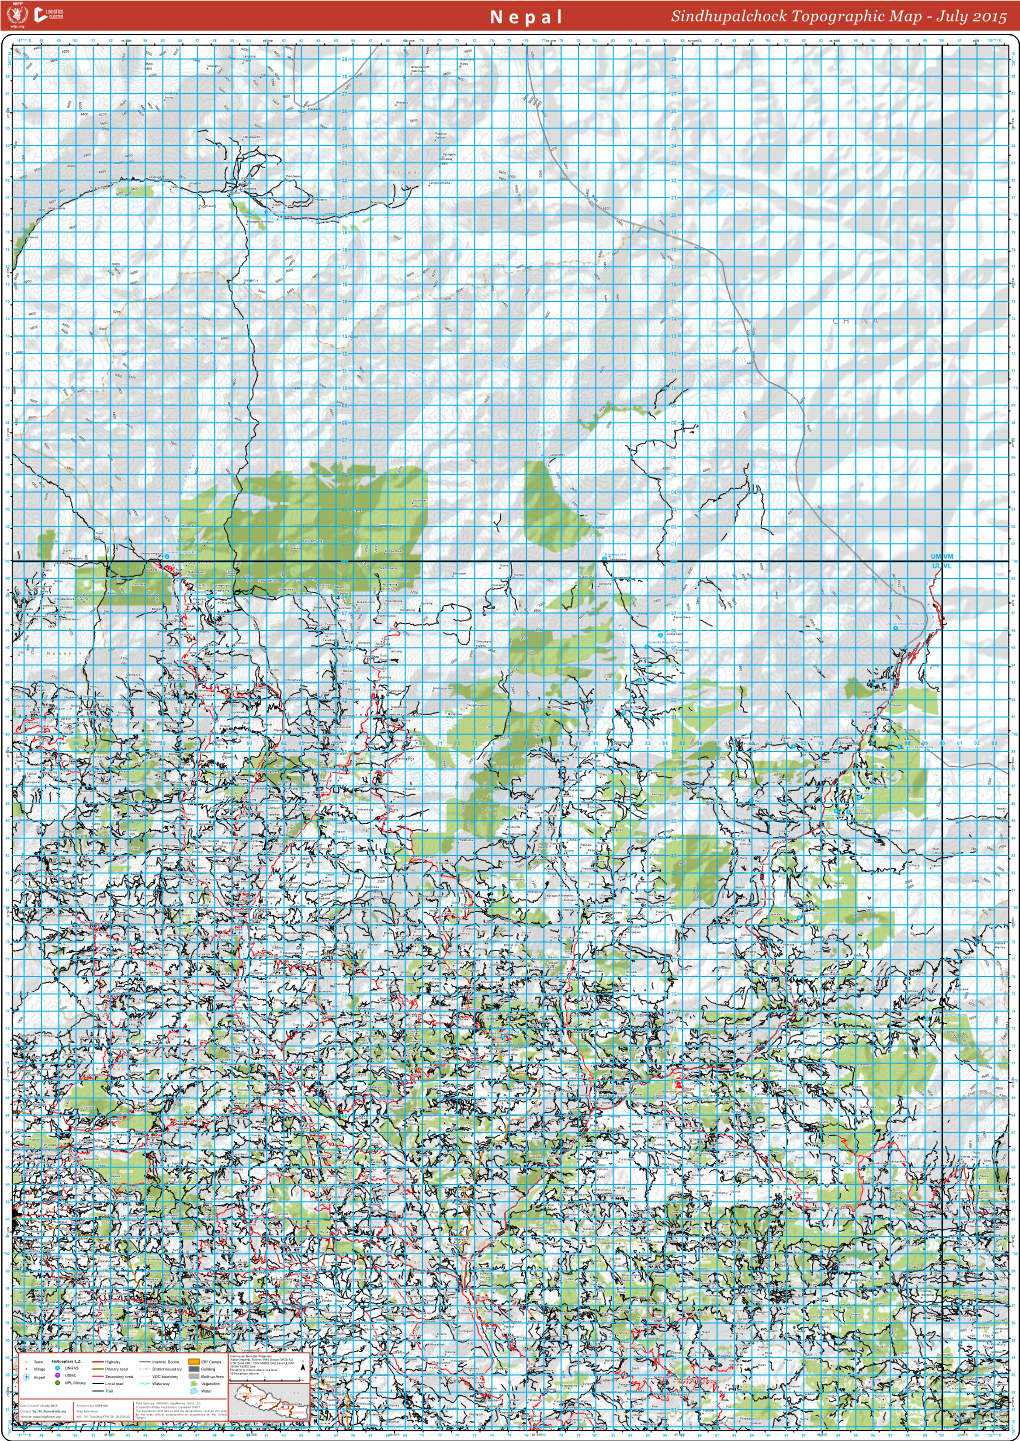 Sindhupalchock Topographic Map - July 2015